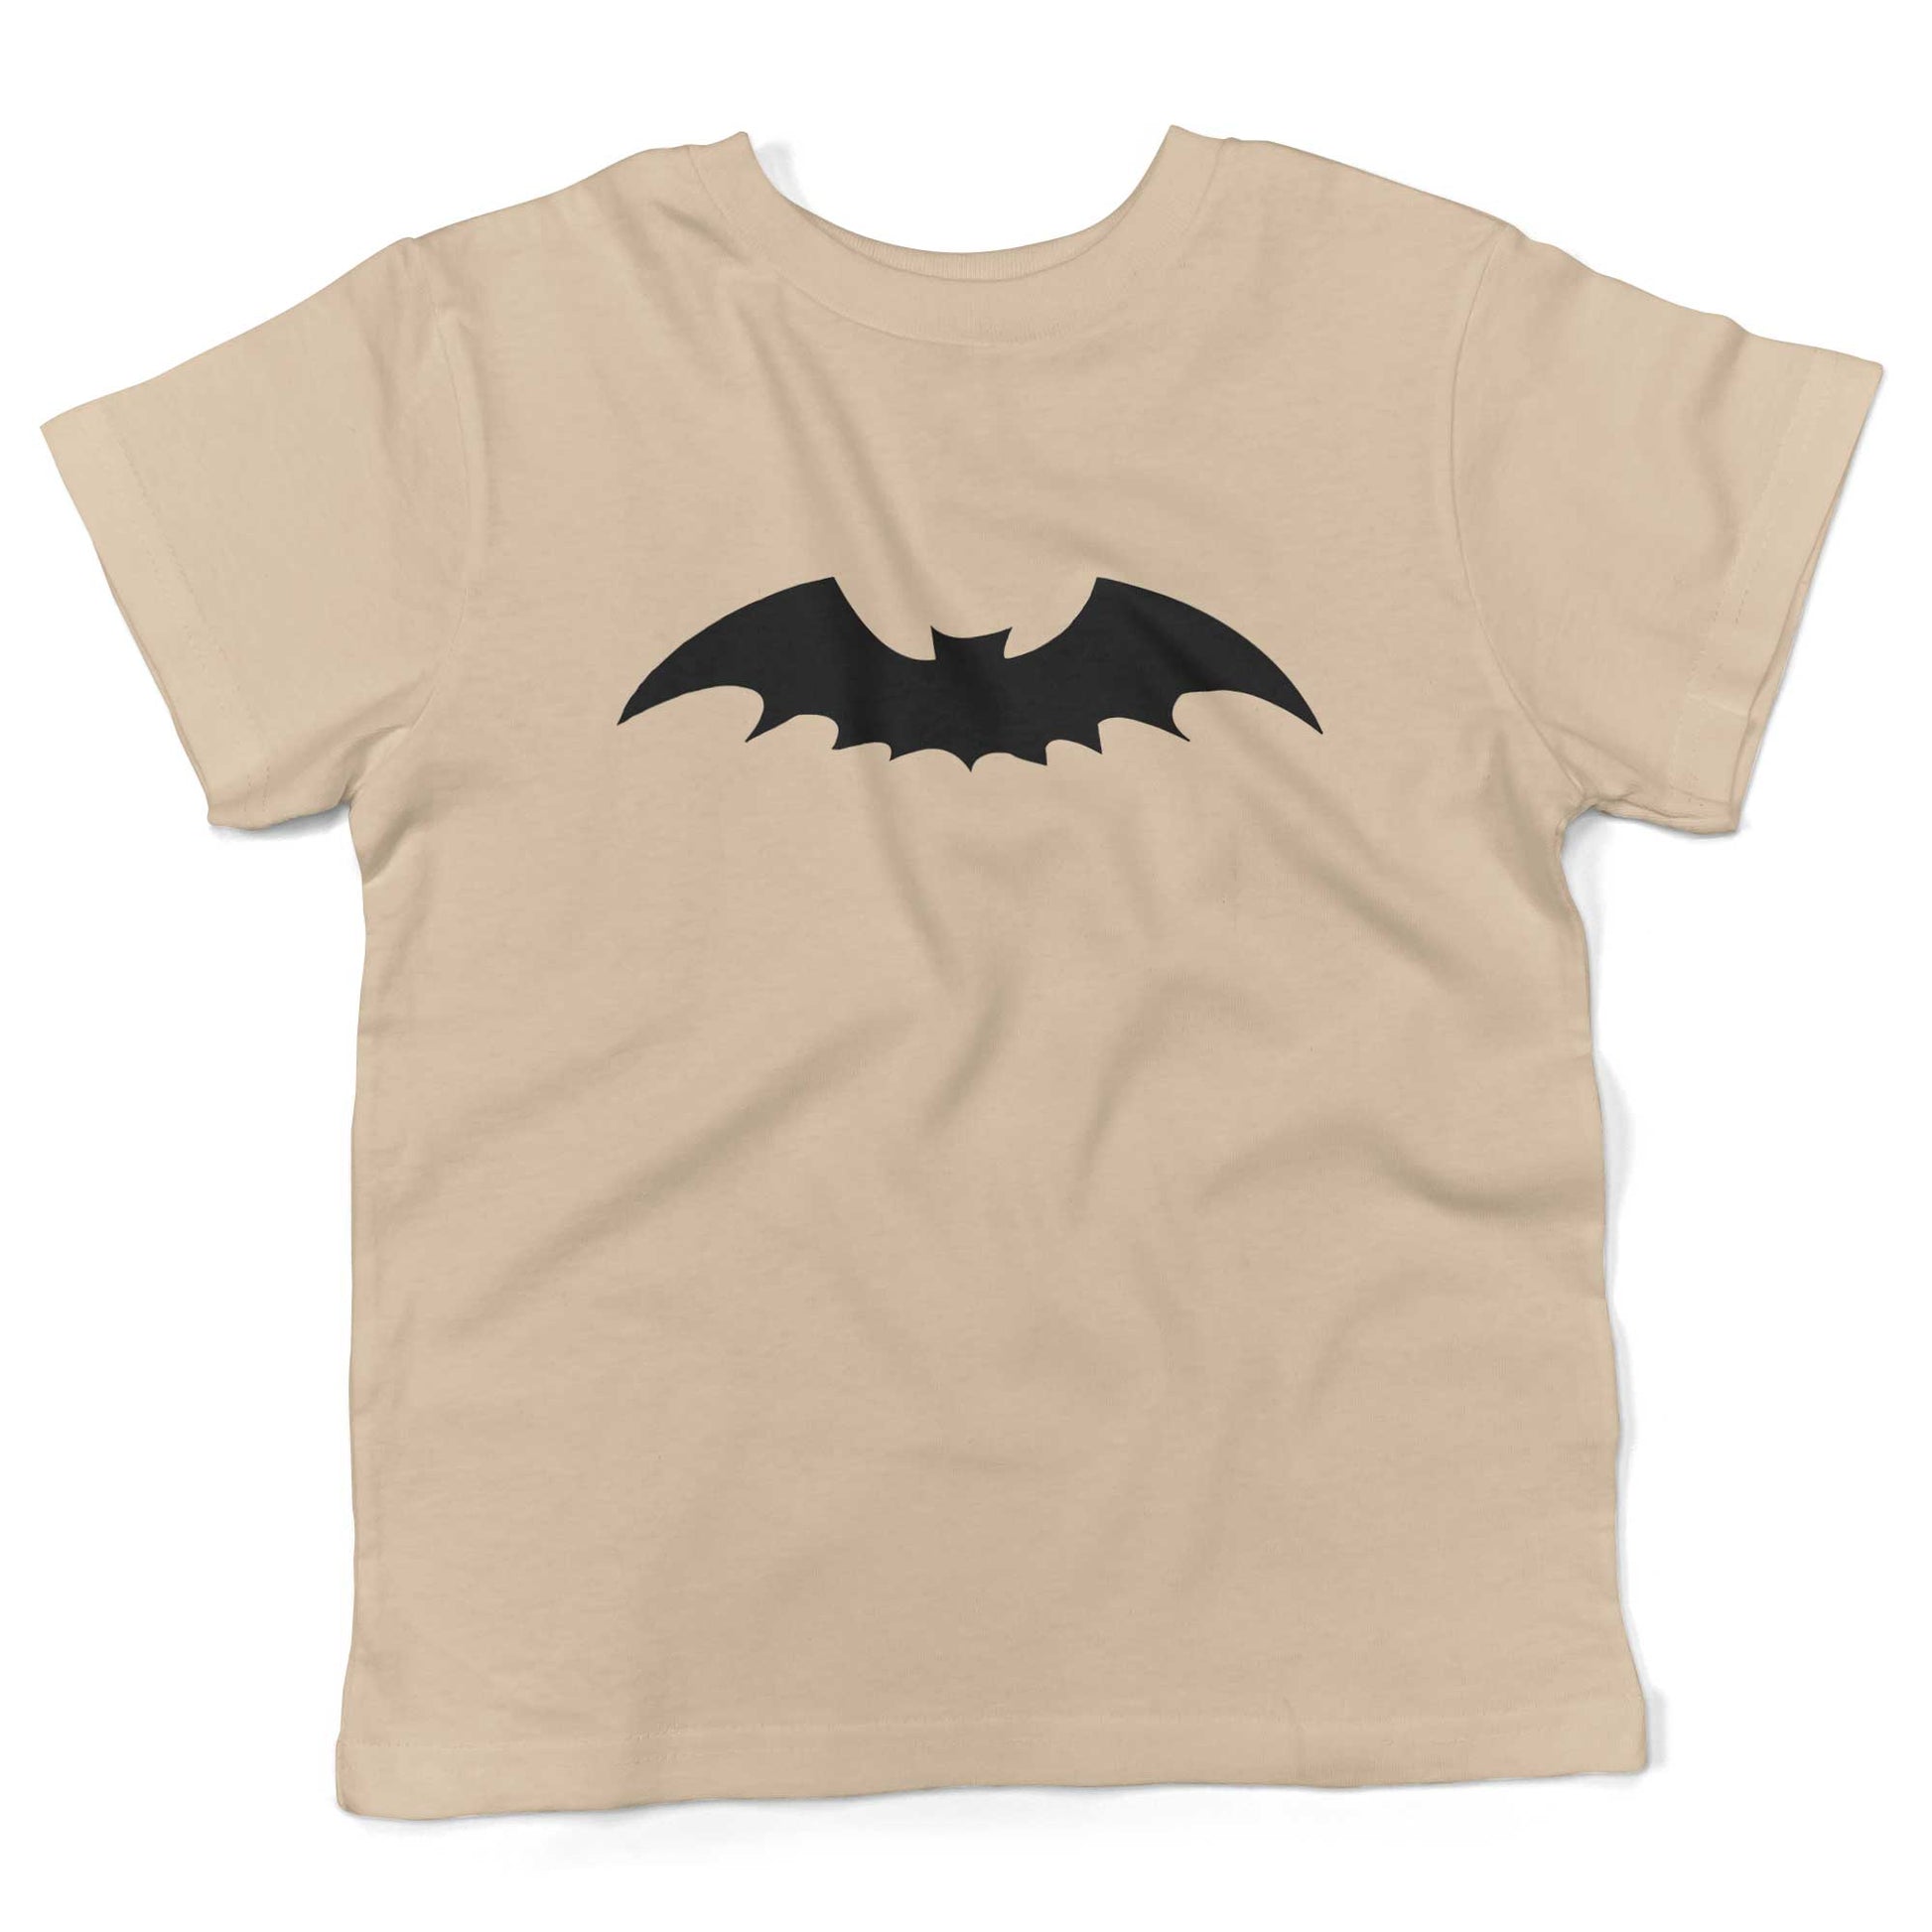 Gothic Bat Toddler Shirt-Organic Natural-2T